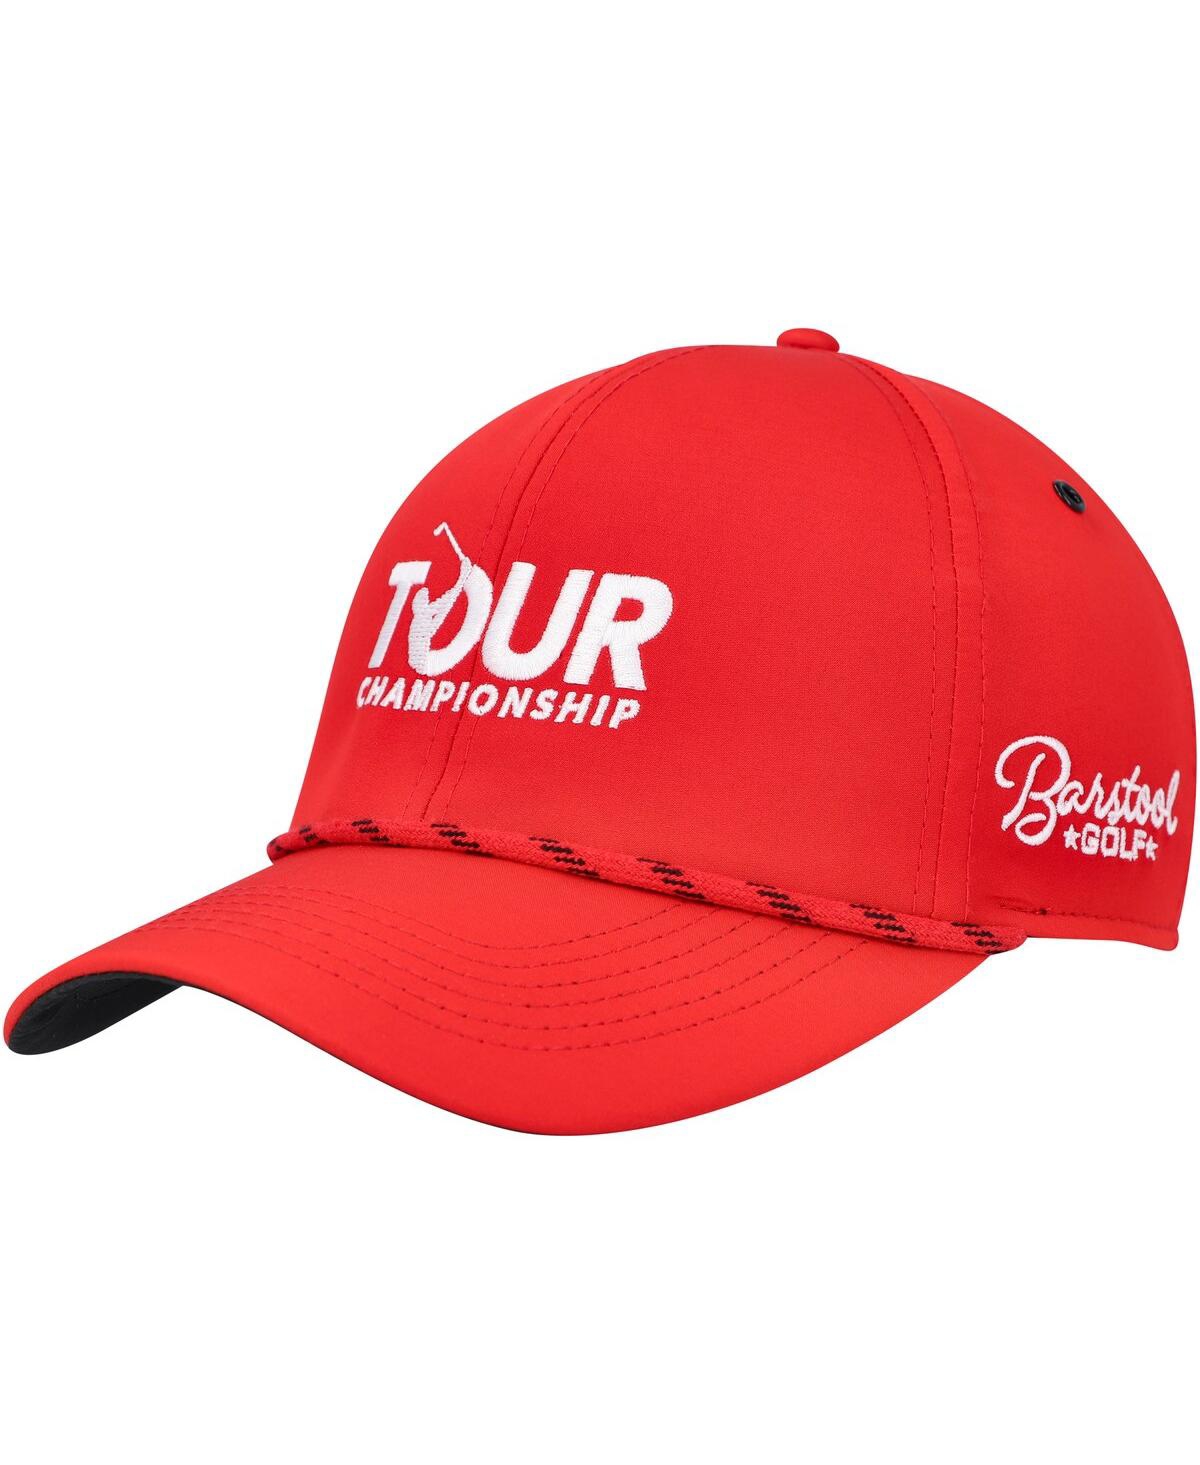 Men's Barstool Golf Red Tour Championship Retro Adjustable Hat - Red